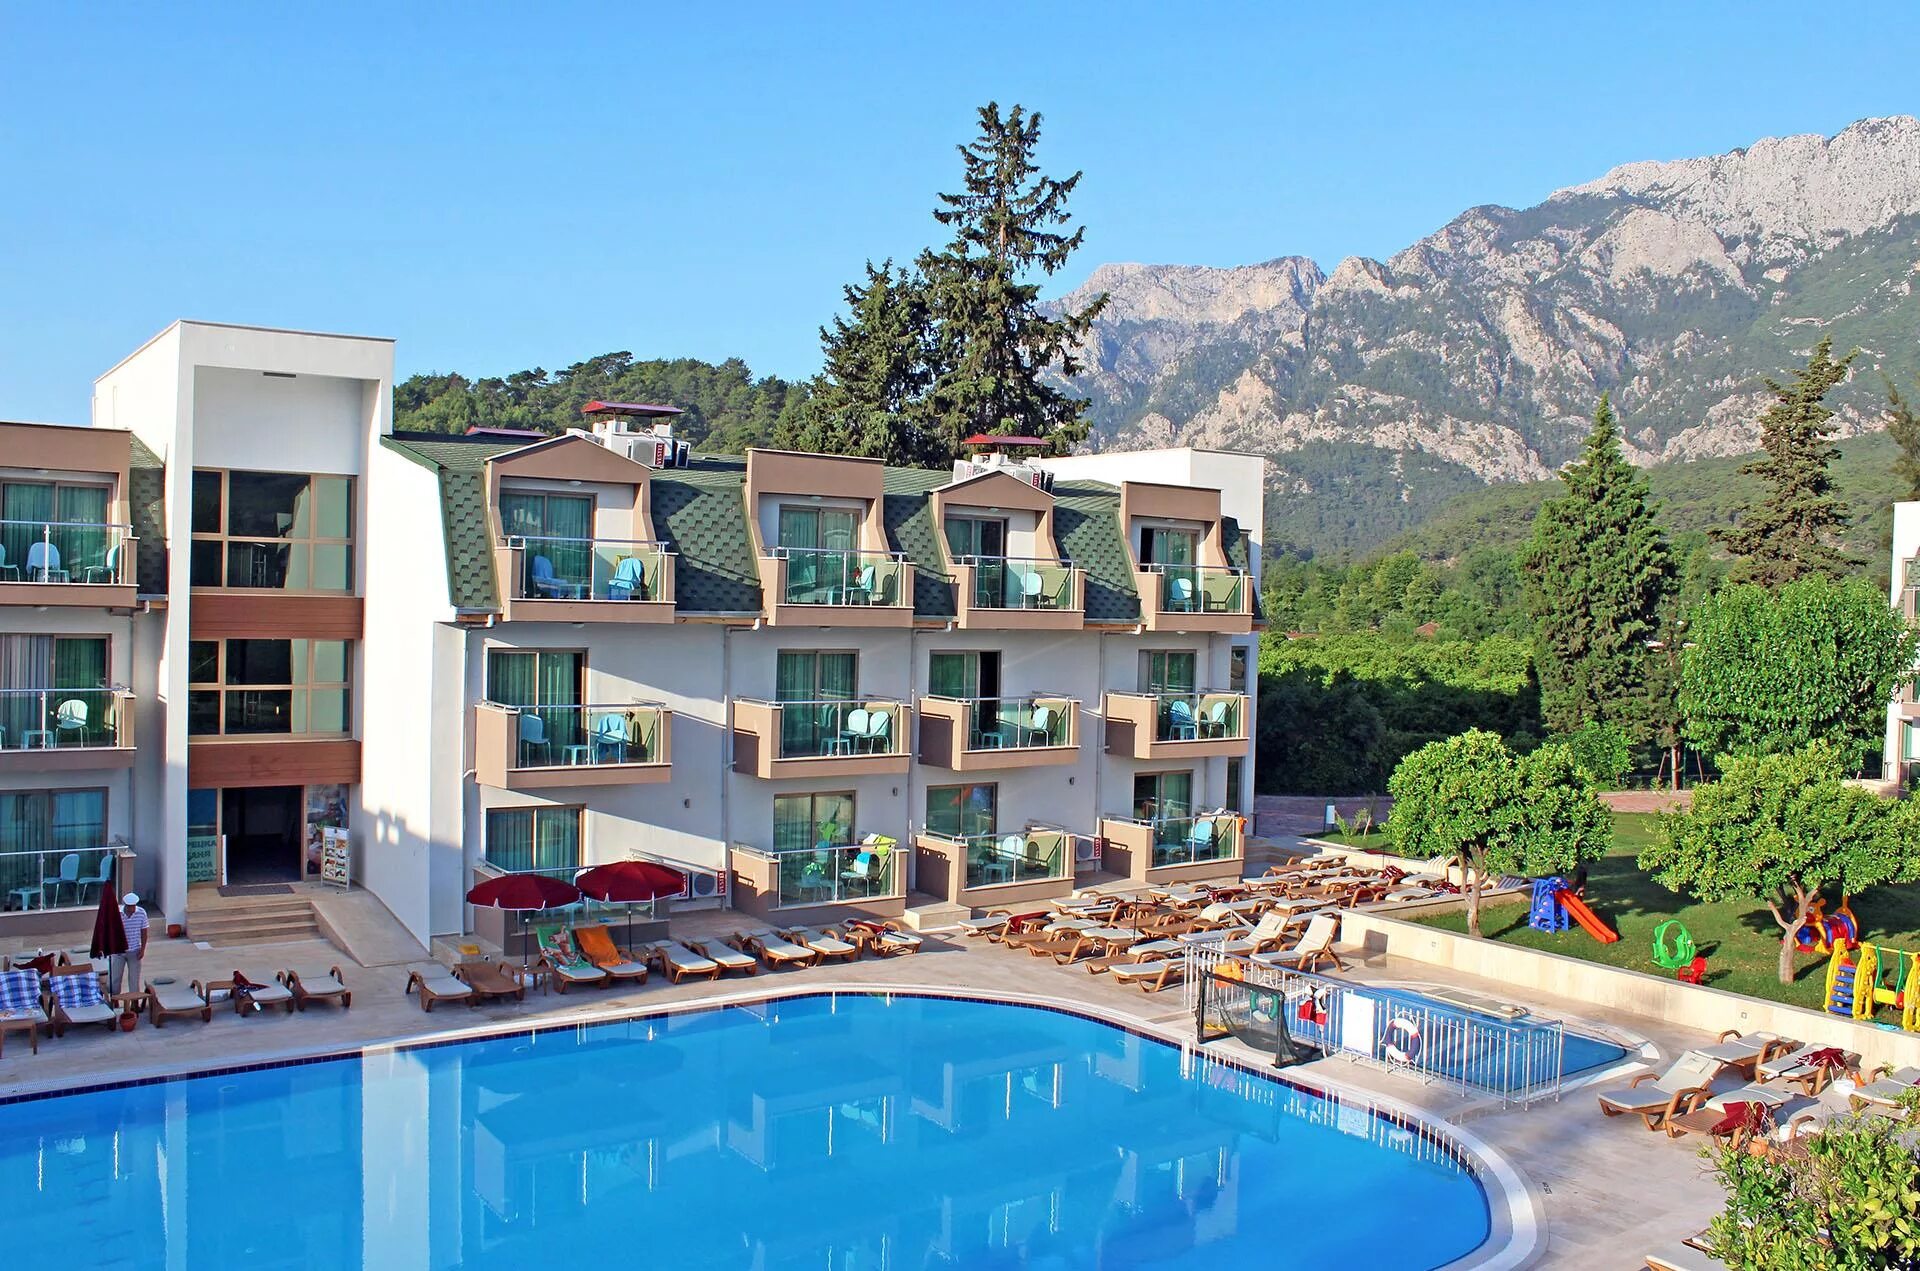 Belenli resort hotel 4. Отель Monna Rosa Garden Resort Hotel. Monna Rosa Кемер Турция. Отель в Турции в Кемере Гарден Резорт.